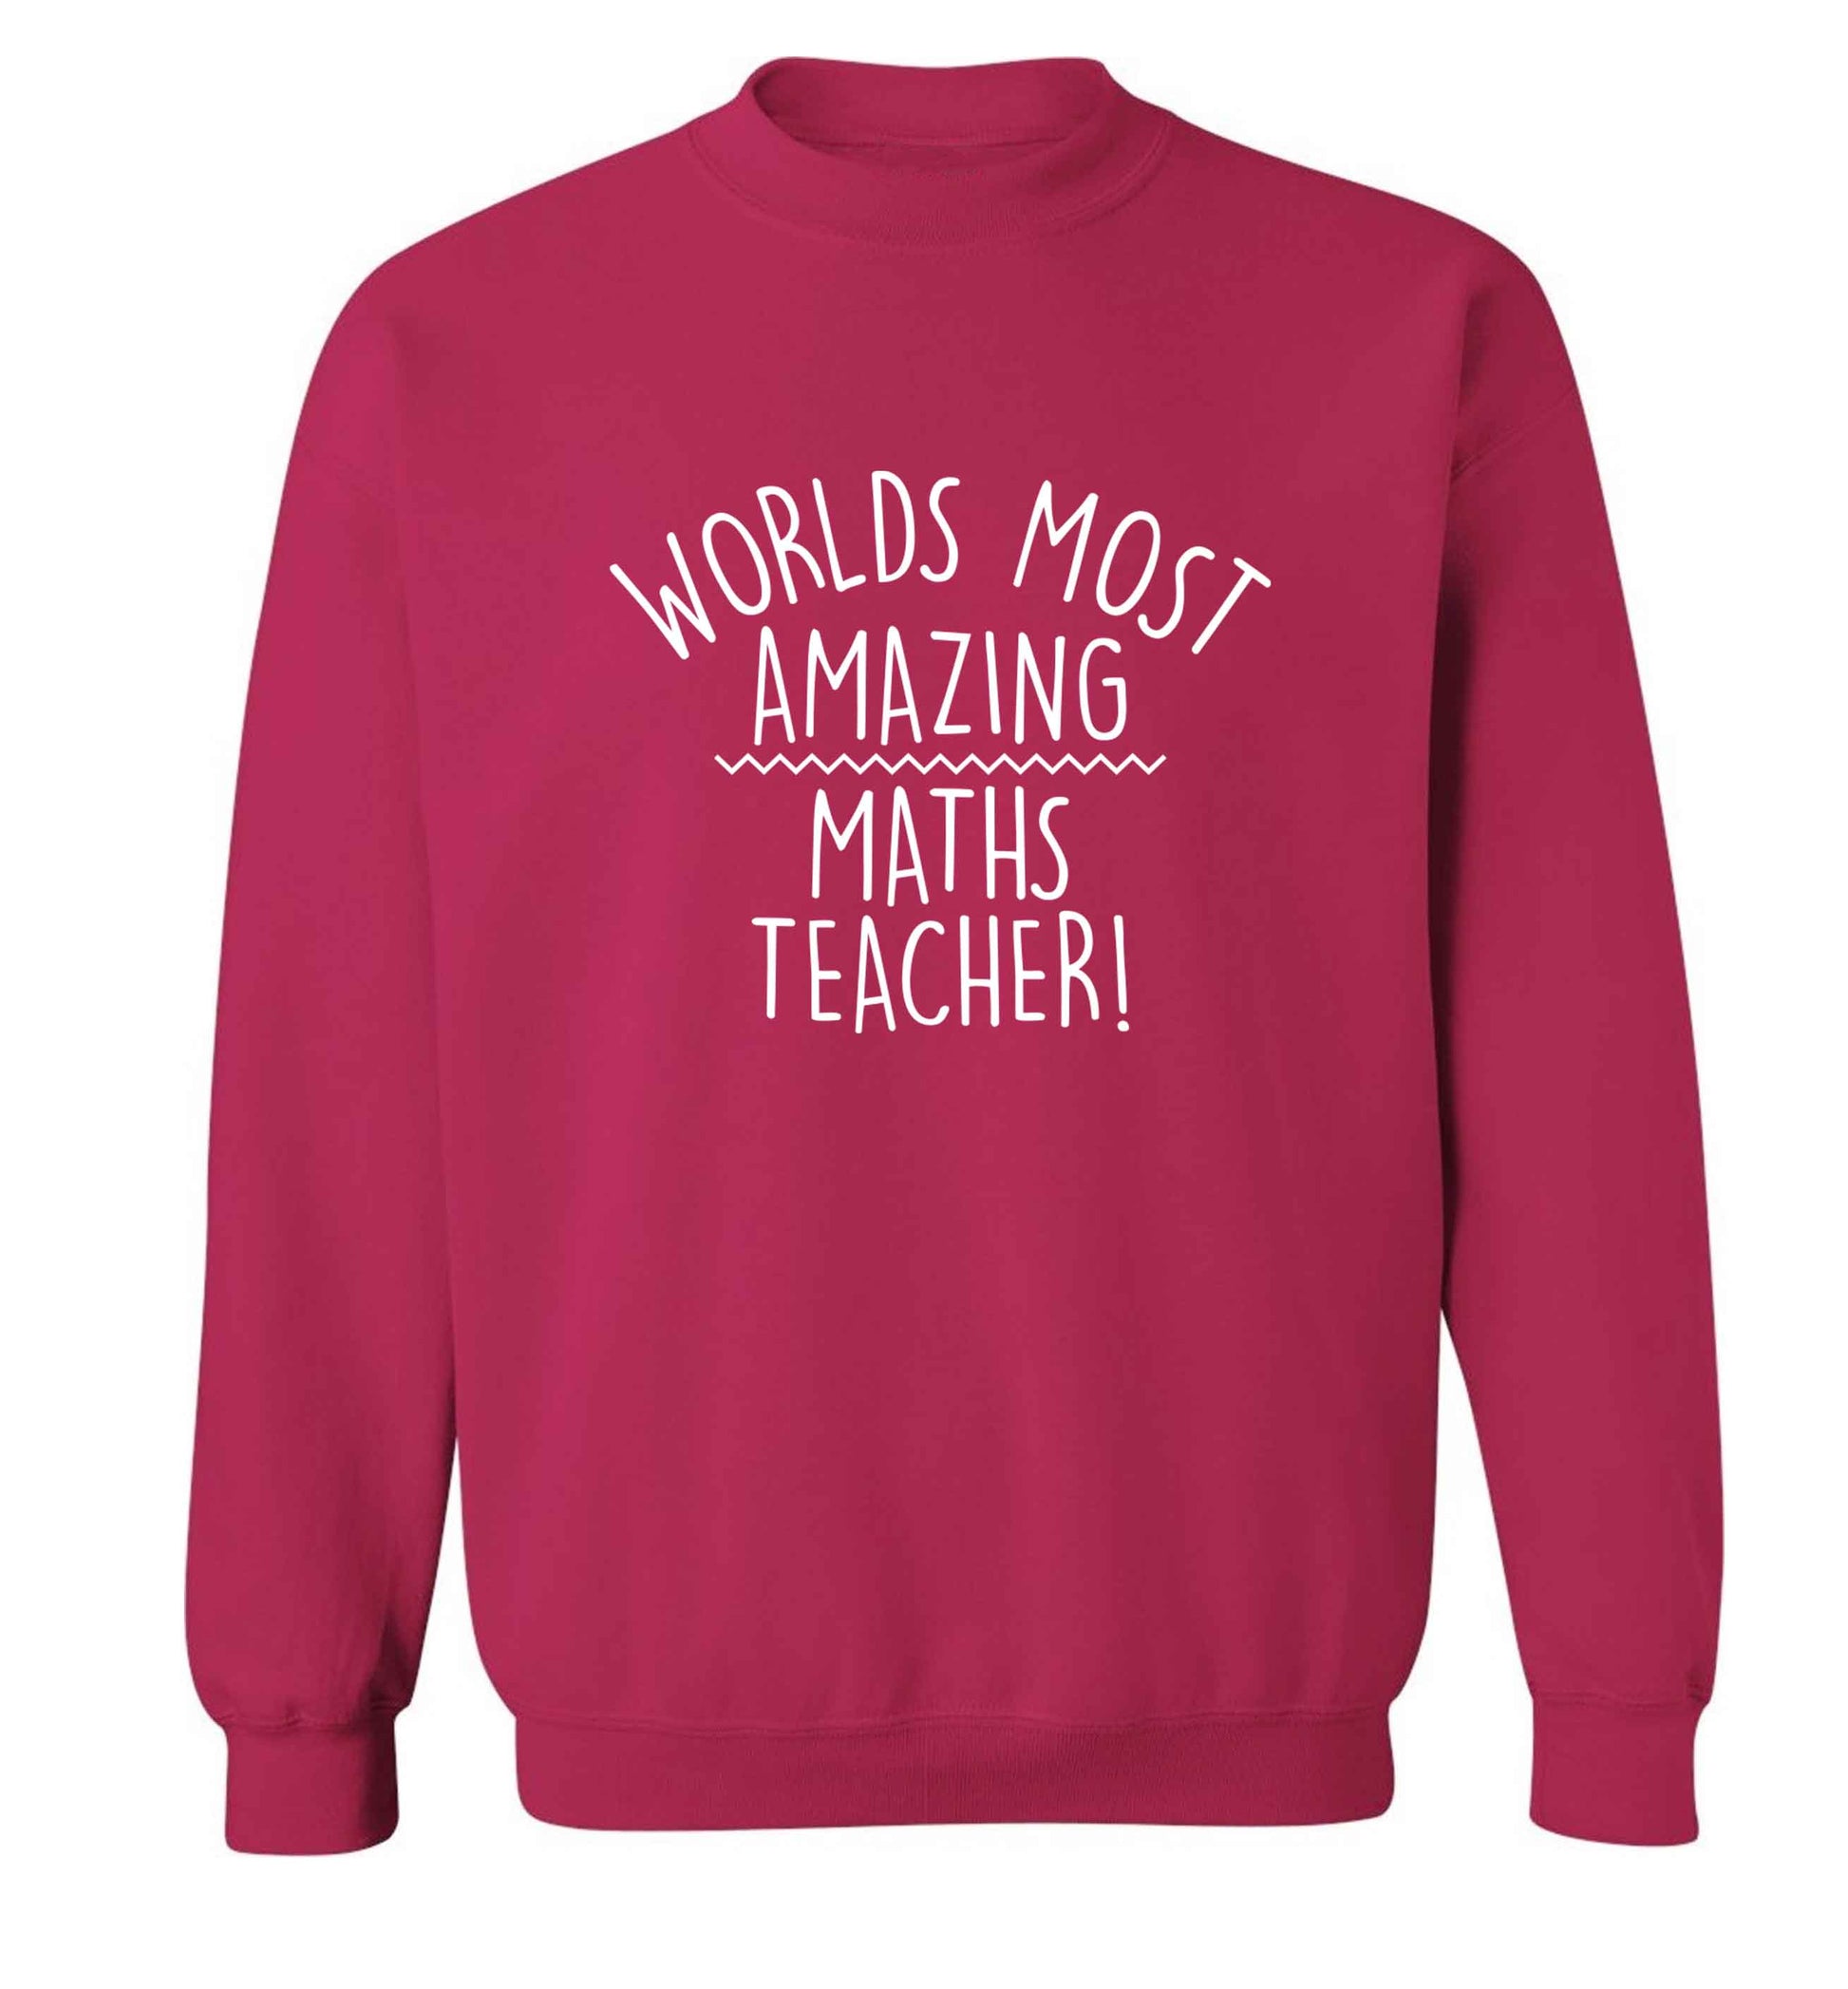 Worlds most amazing maths teacher adult's unisex pink sweater 2XL